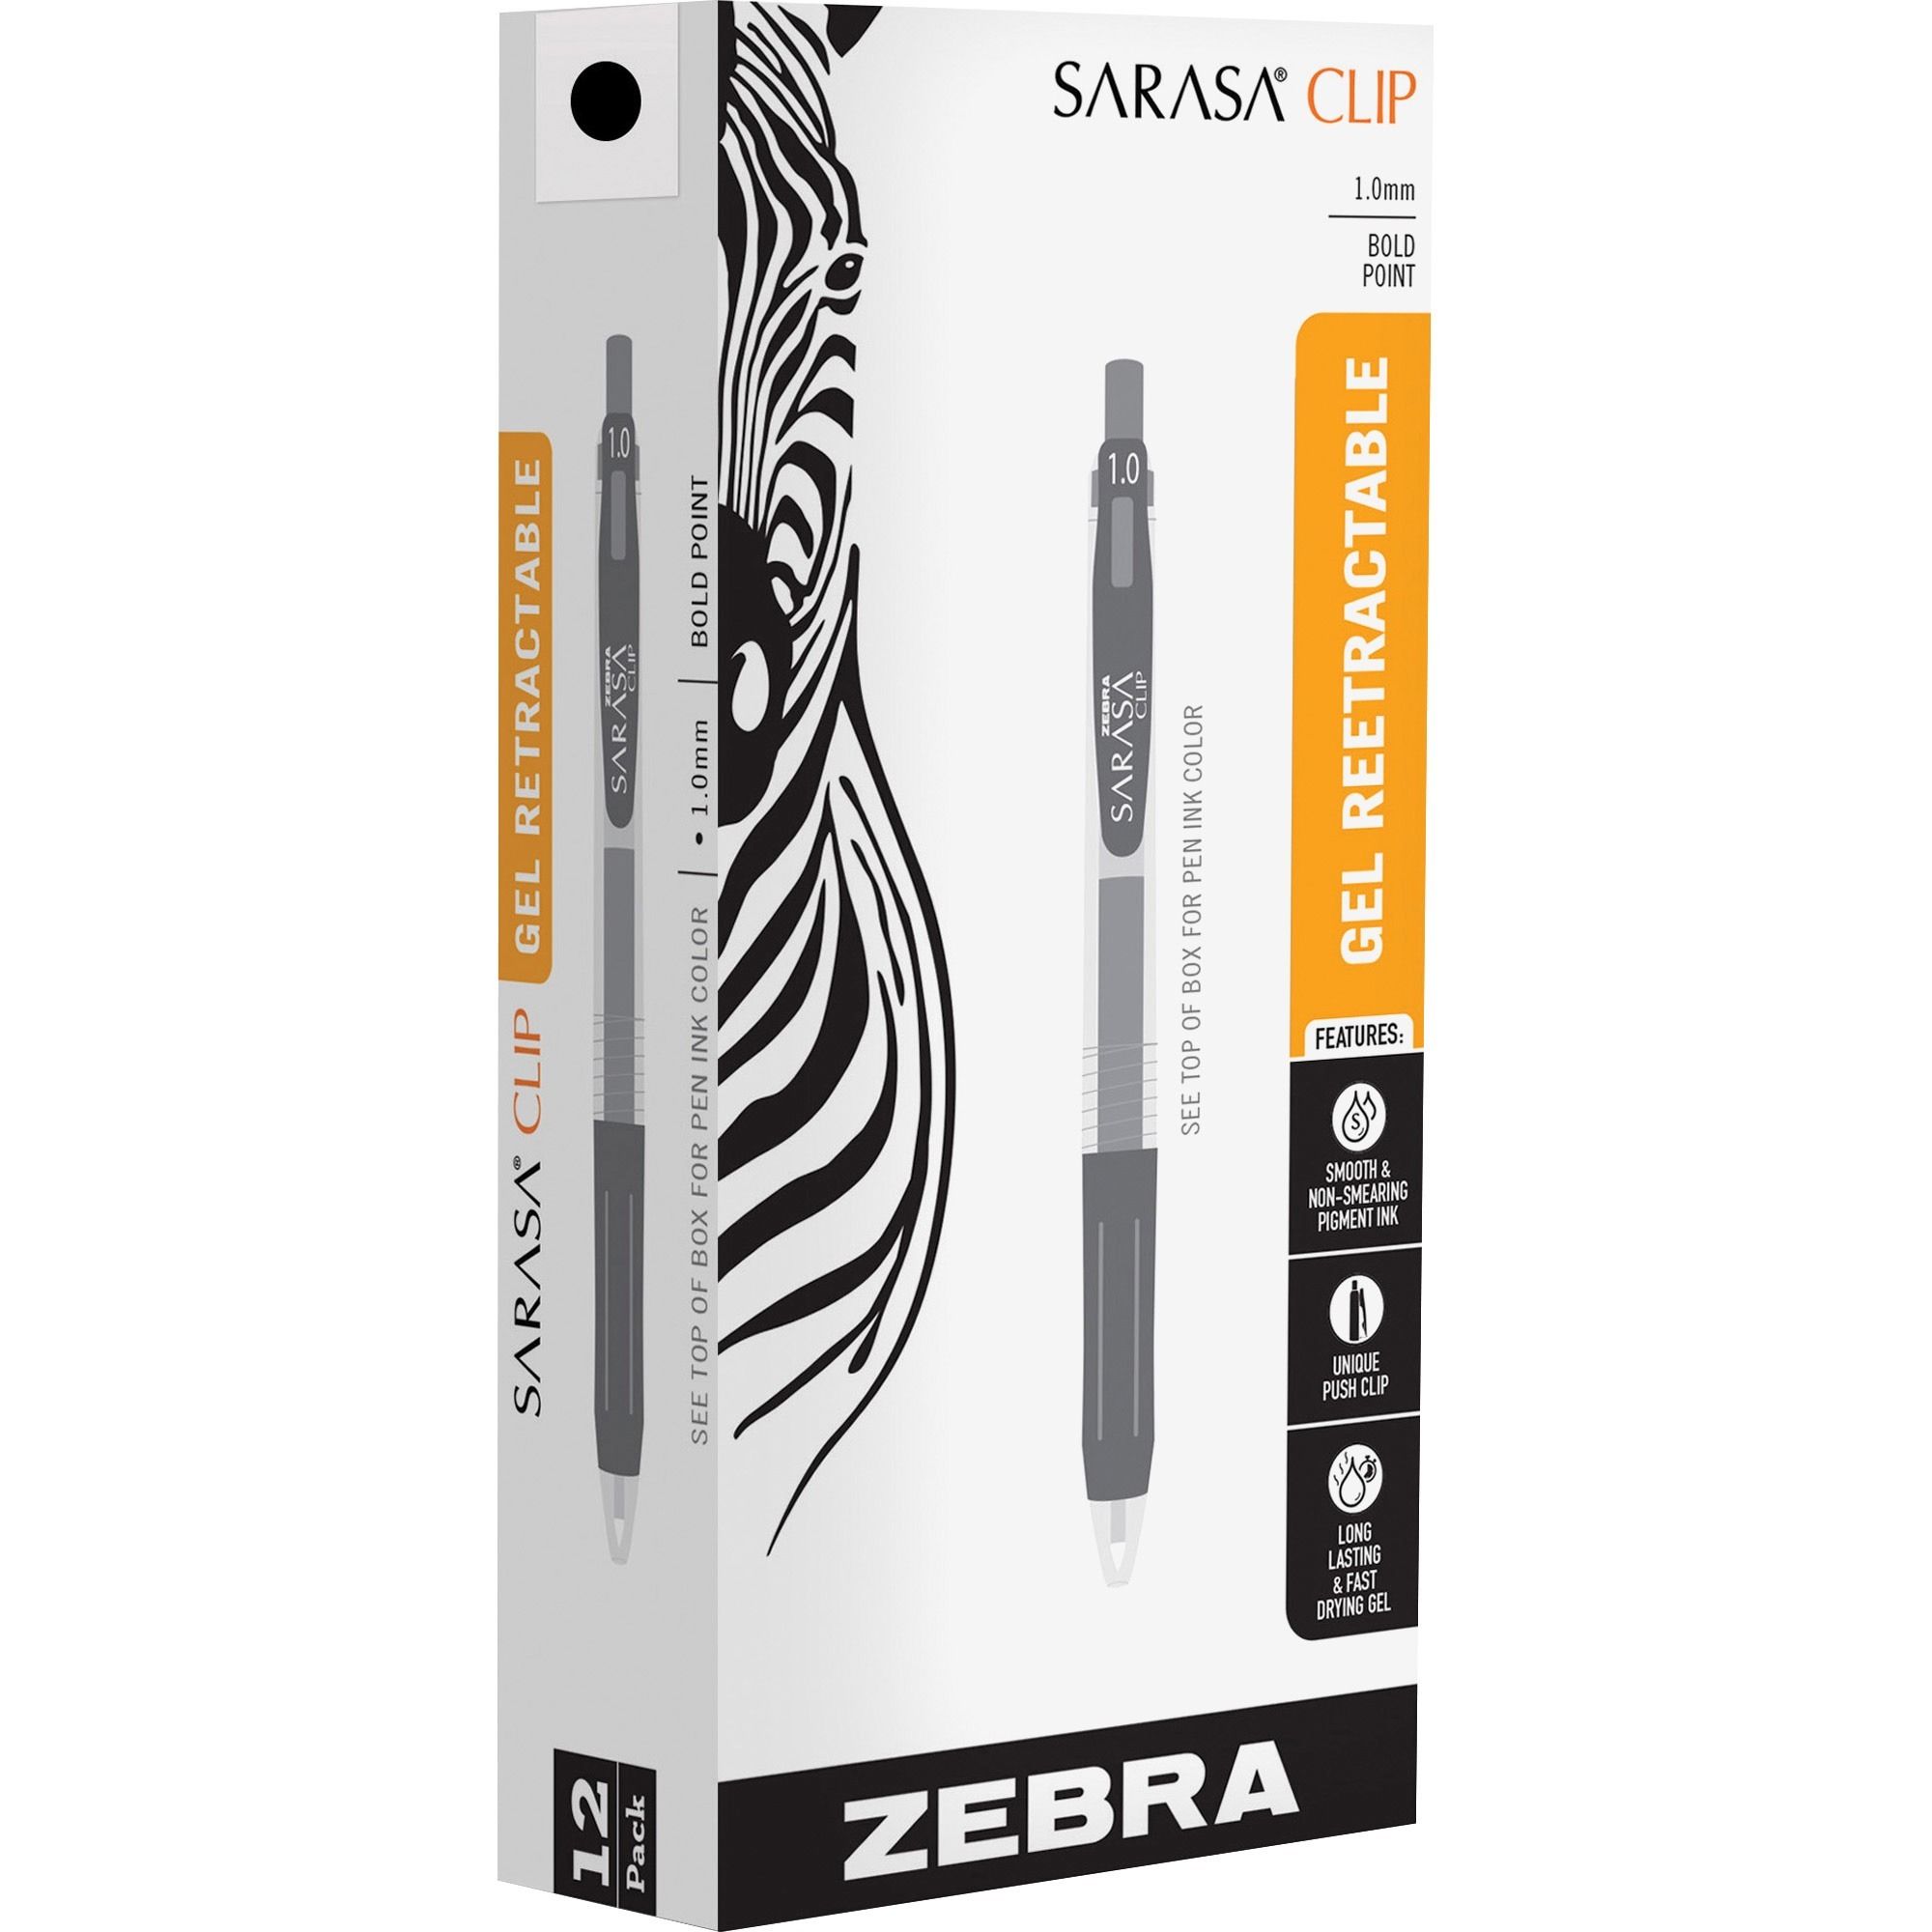 Sarasa Clip 1.0mm Gel Pen by Zebra® ZEB48810 | OnTimeSupplies.com